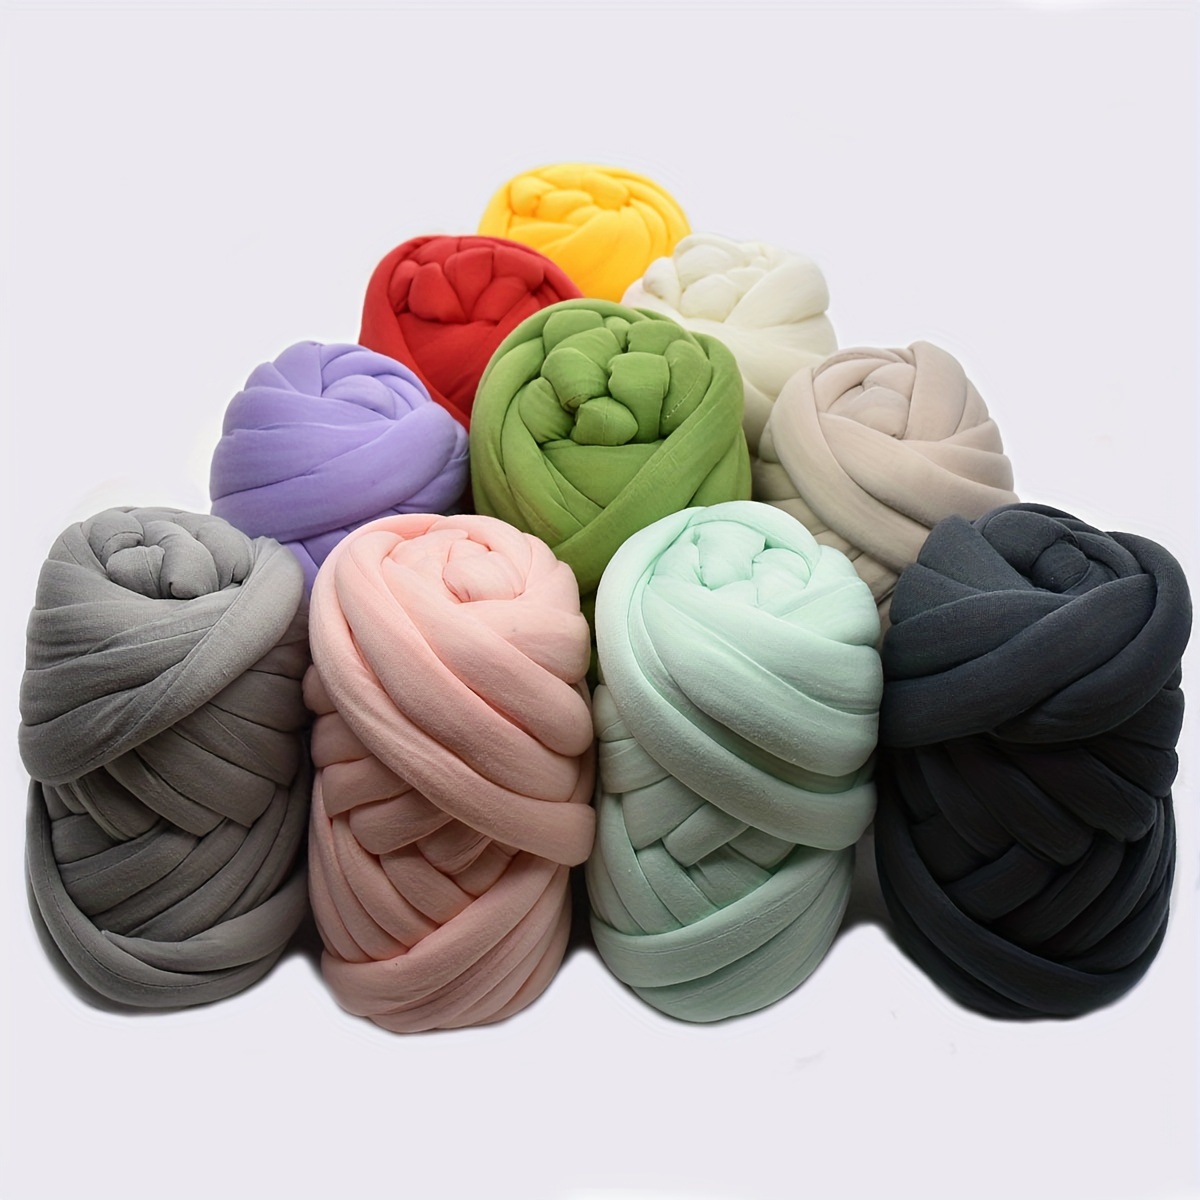 250g Thick Super Bulky Chunky Yarn Hand Knitting Crochet Soft Big Cotton  Diy Arm Knitting Roving Spinning Yarn Blanket, Save Clearance Deals